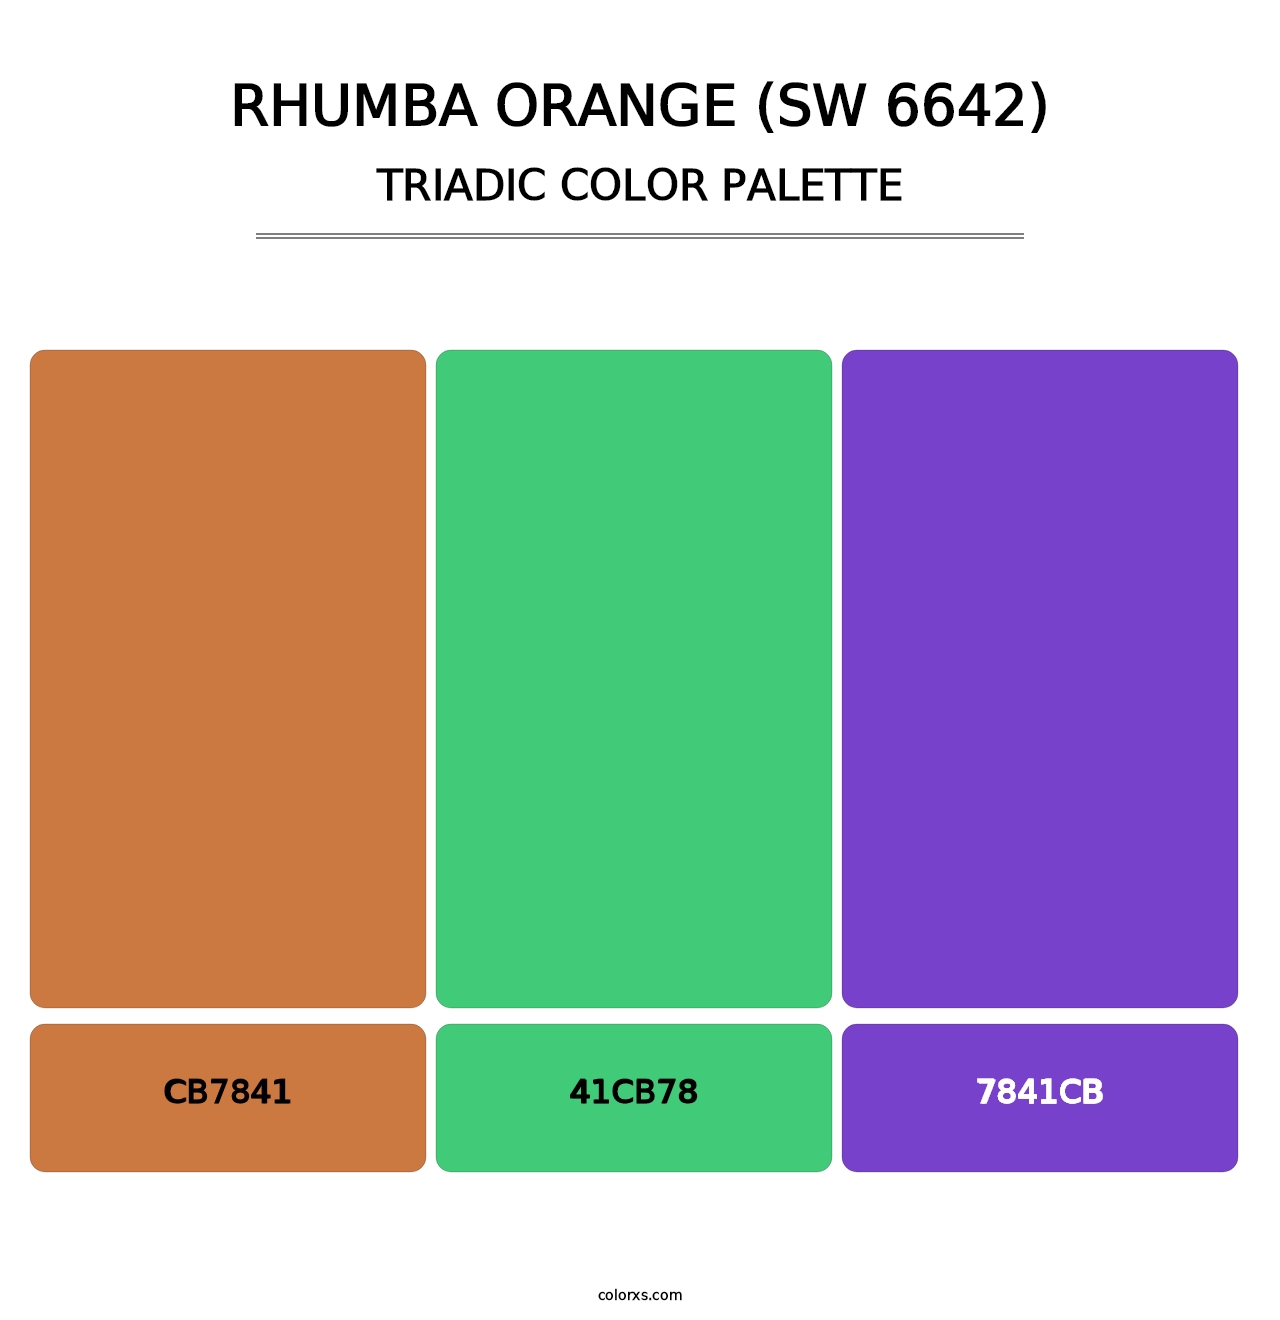 Rhumba Orange (SW 6642) - Triadic Color Palette